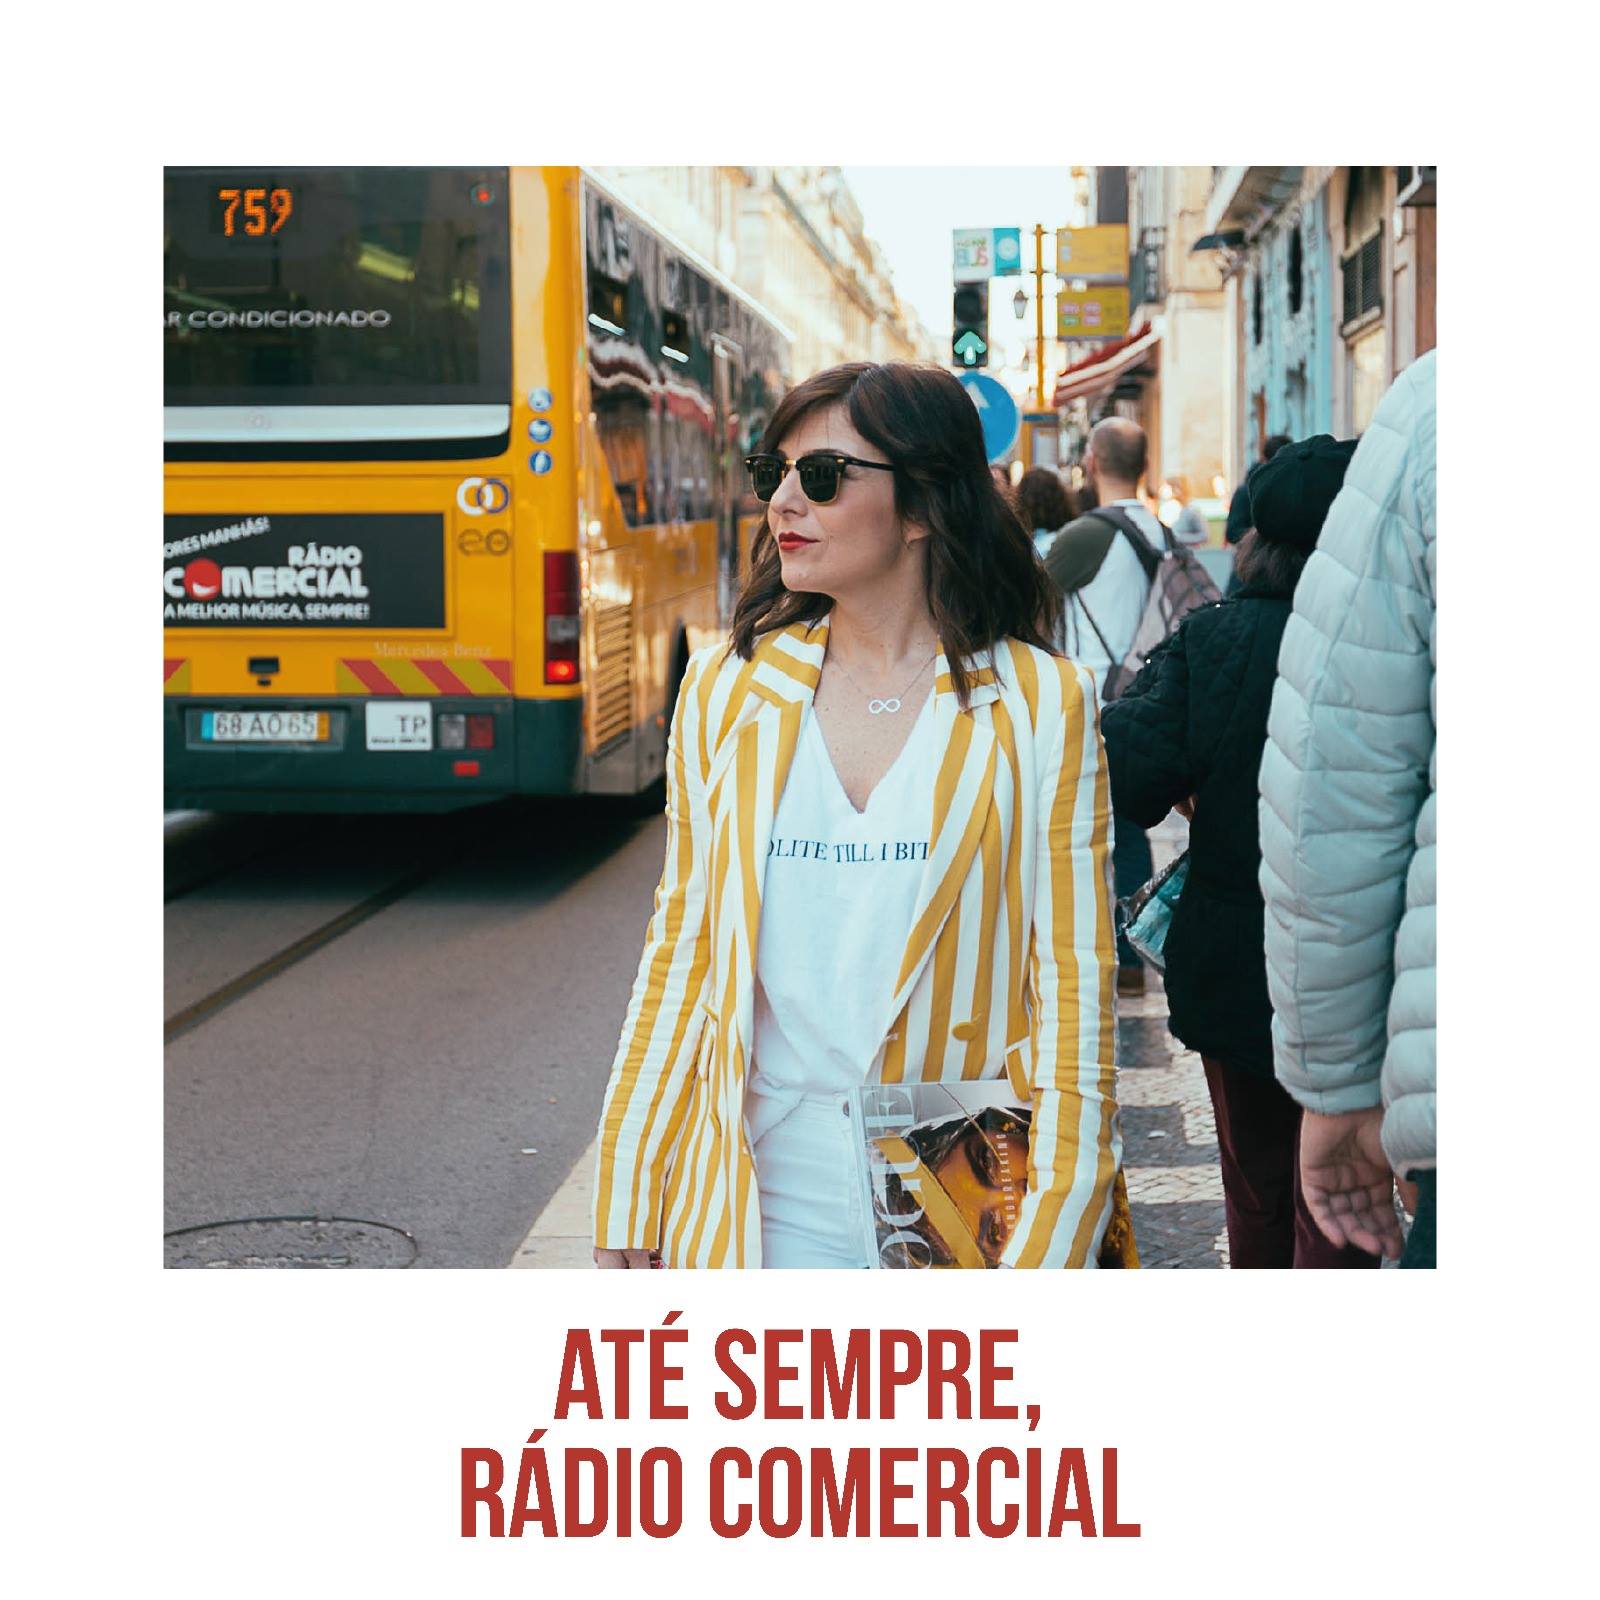 Catarina Miranda Radio Comercial Catarina Miranda Sai Da Radio Comercial